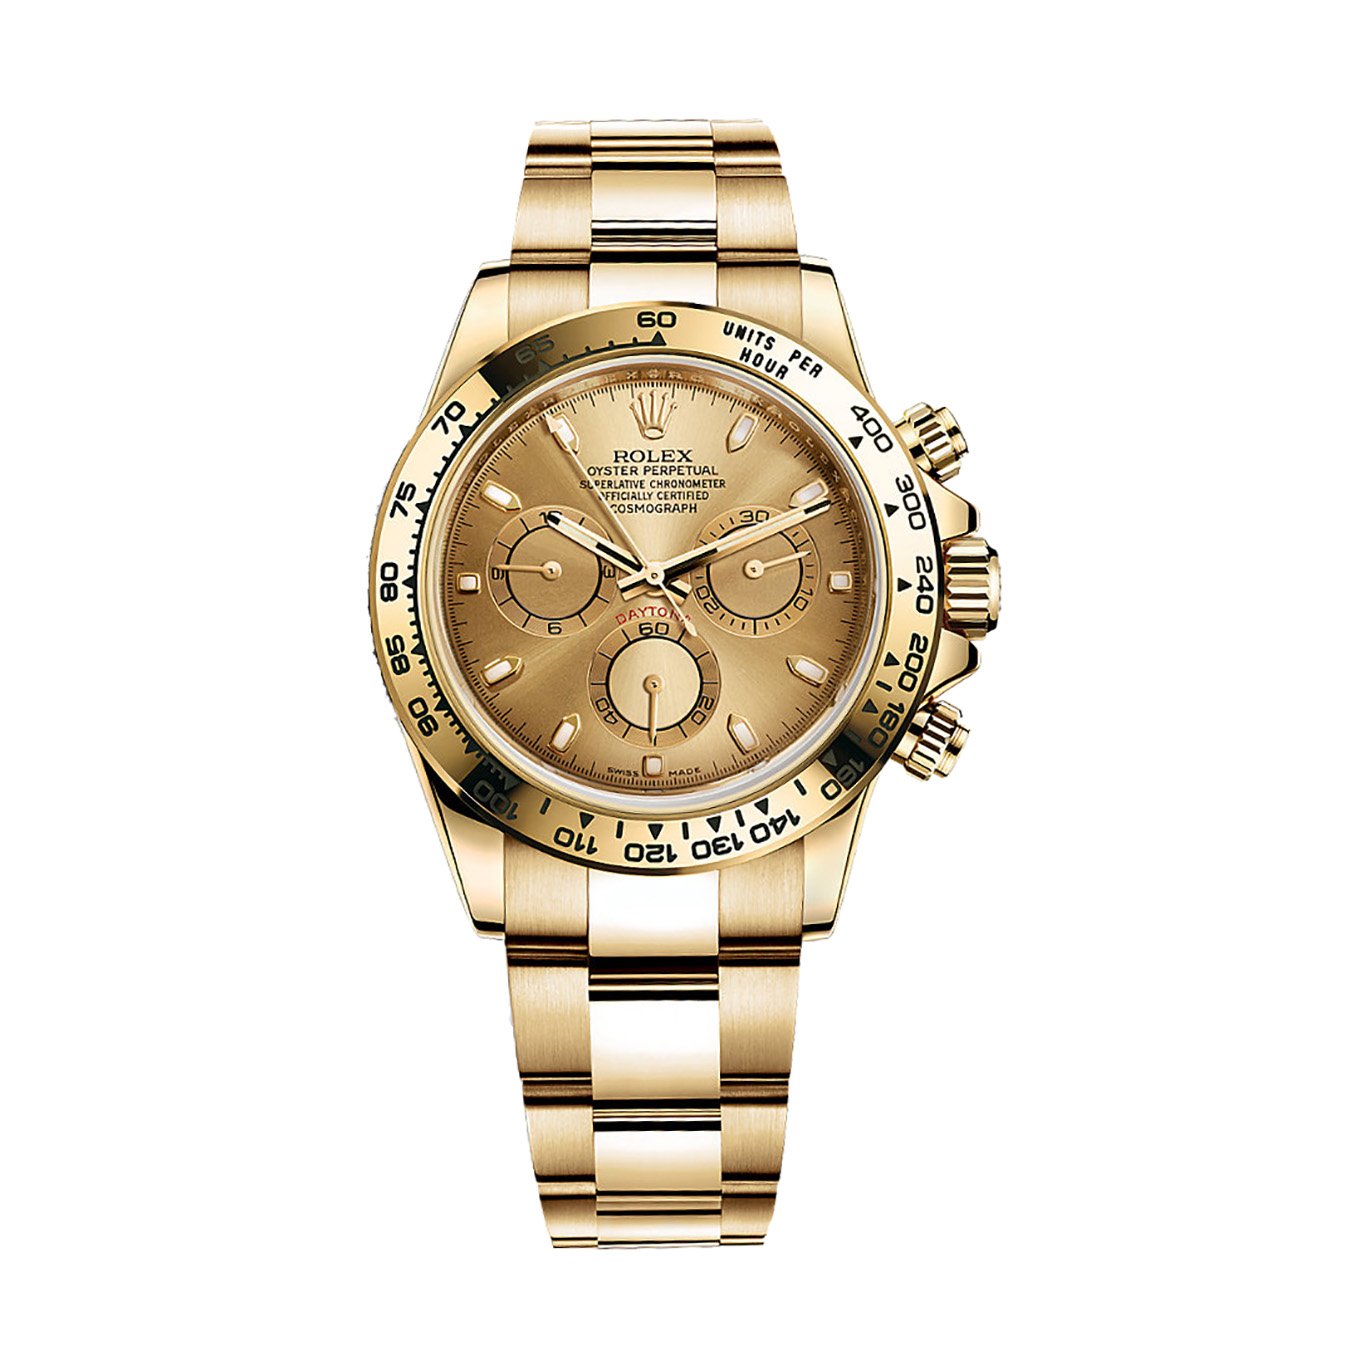 Cosmograph Daytona 116508 Gold Watch (Champagne)